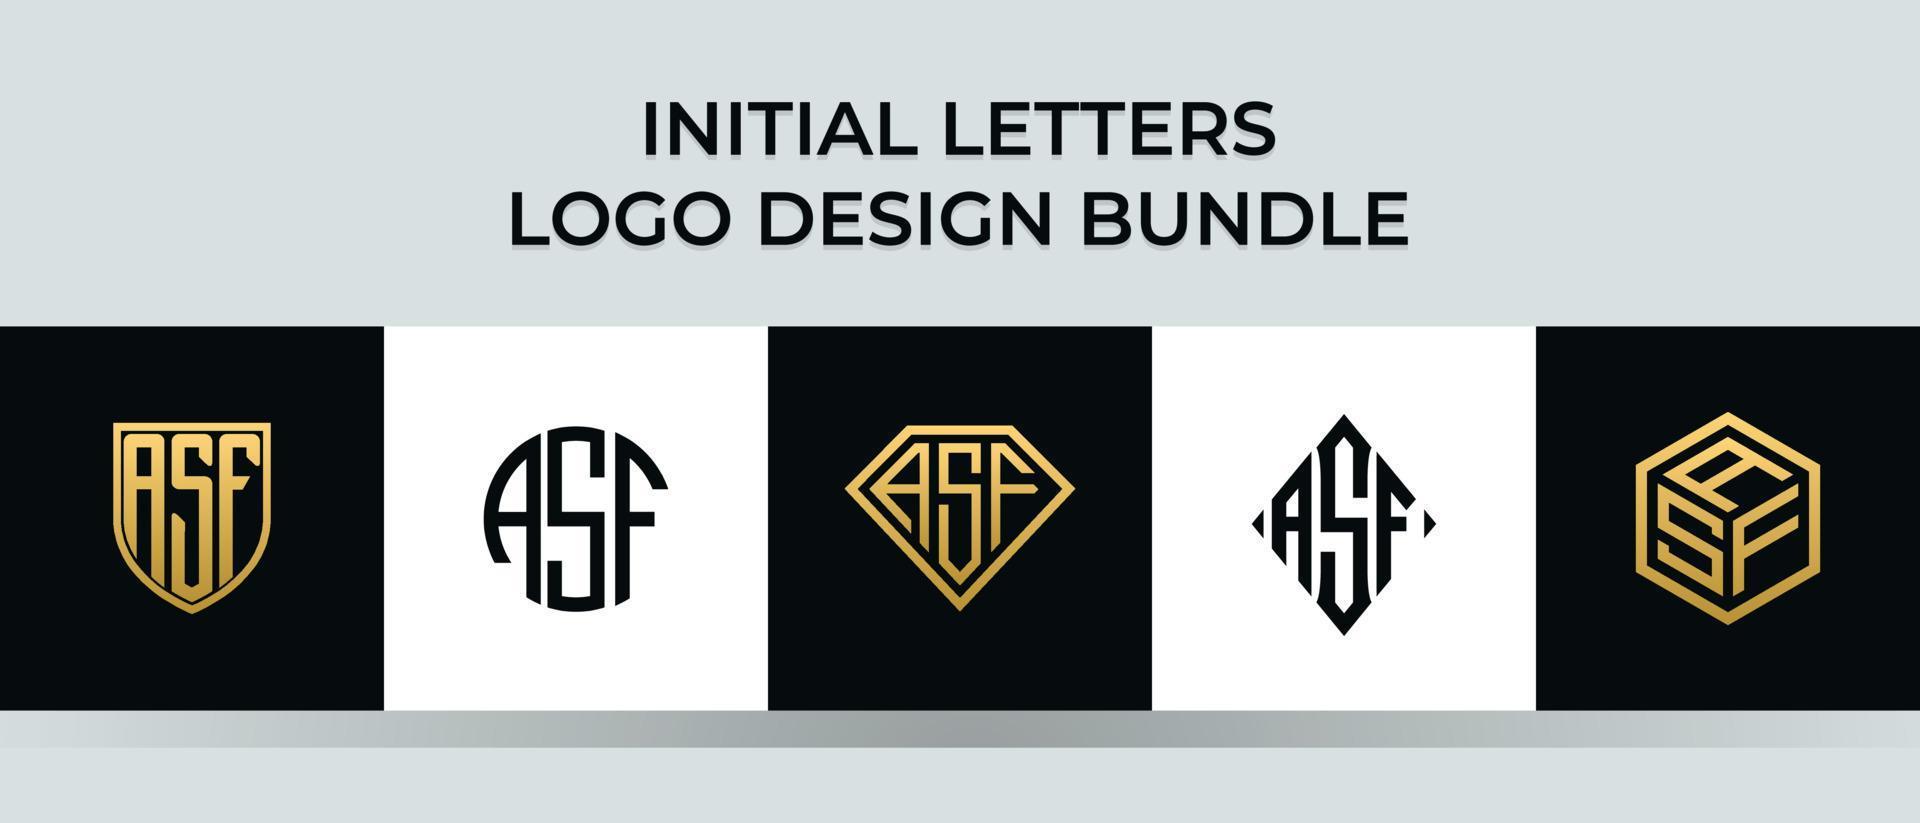 paquet de conceptions de logo asf de lettres initiales vecteur